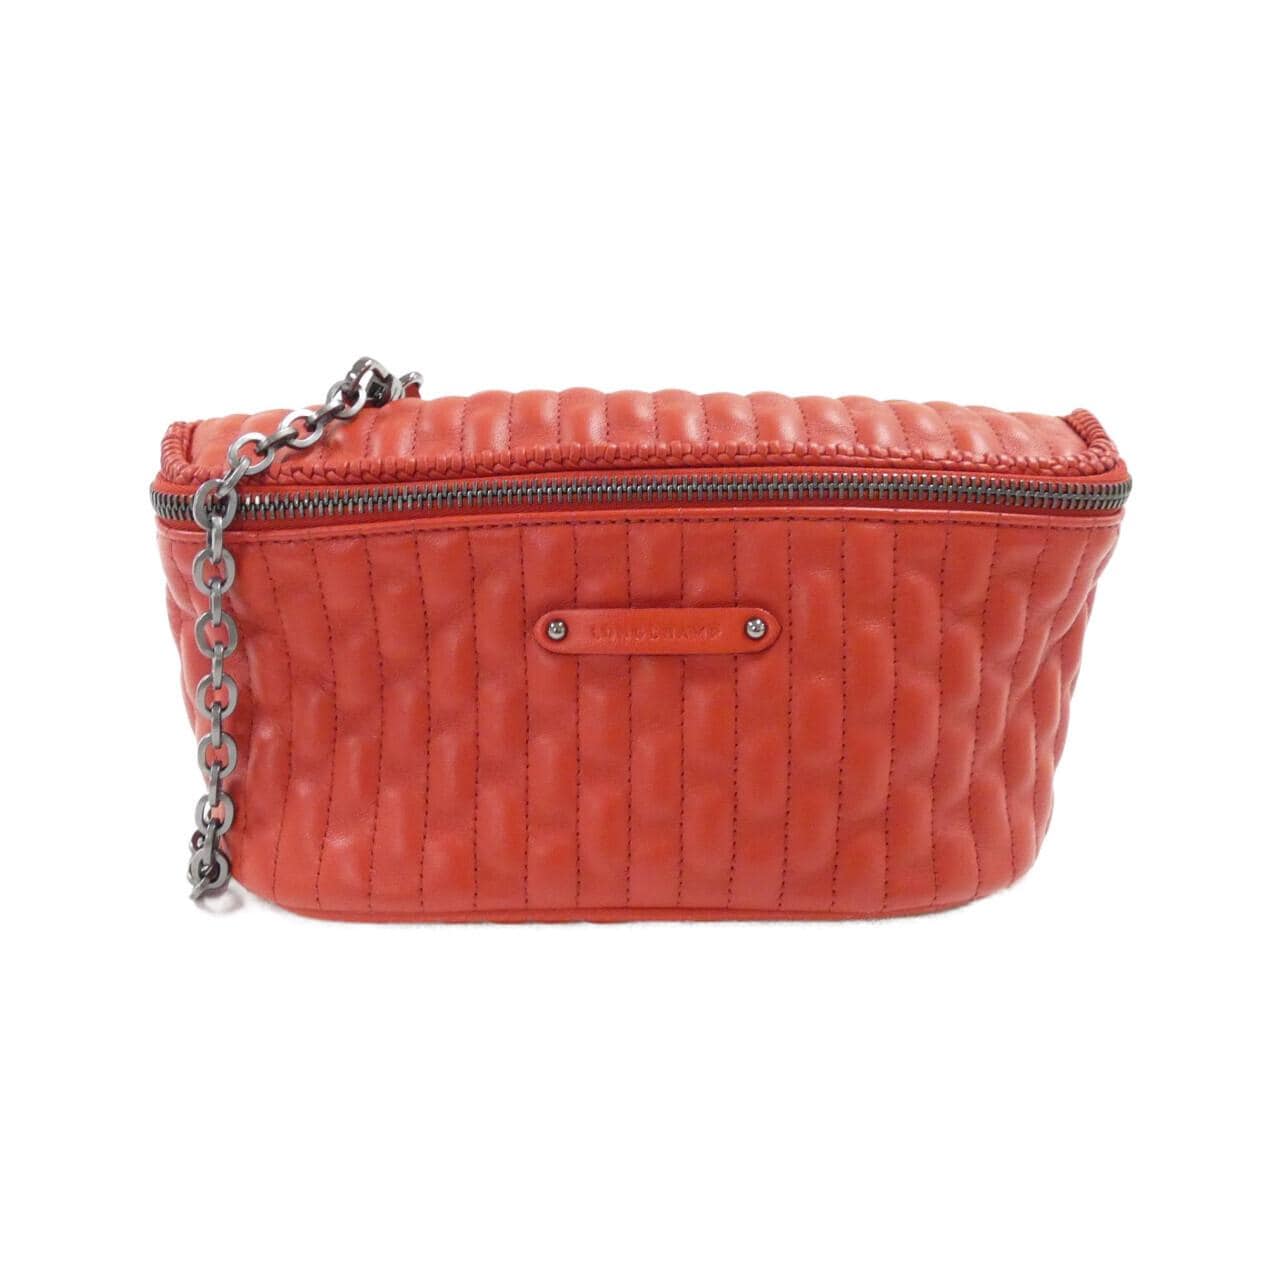 [BRAND NEW] Longchamp Amazon 8061 941 Shoulder Bag